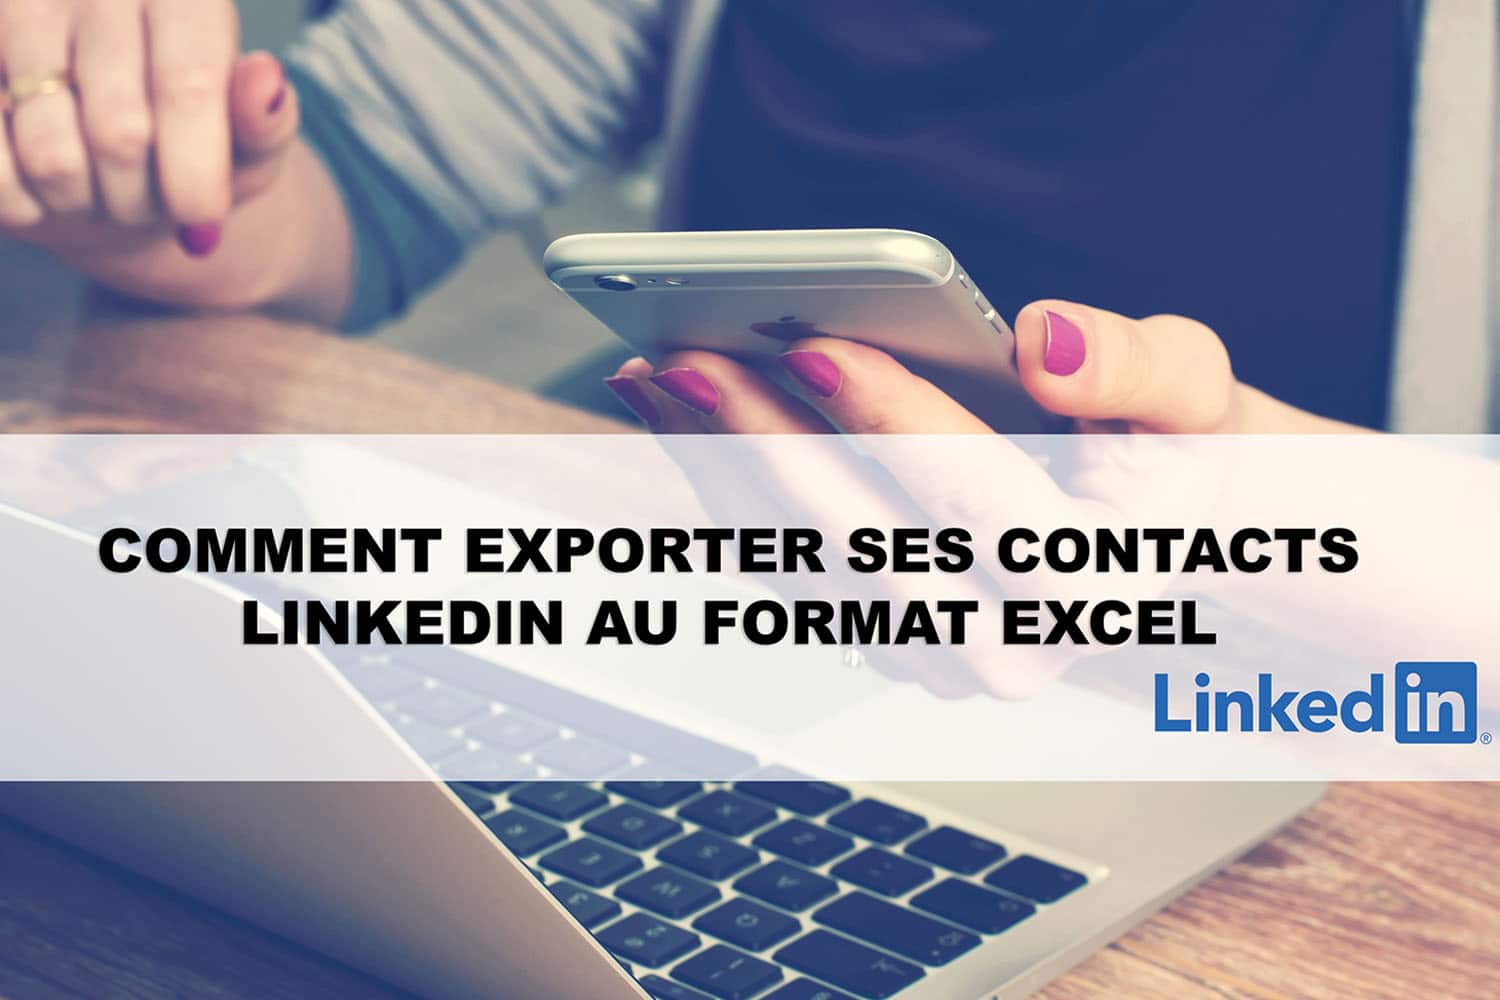 Comment exporter ses contacts LinkedIn au format Excel